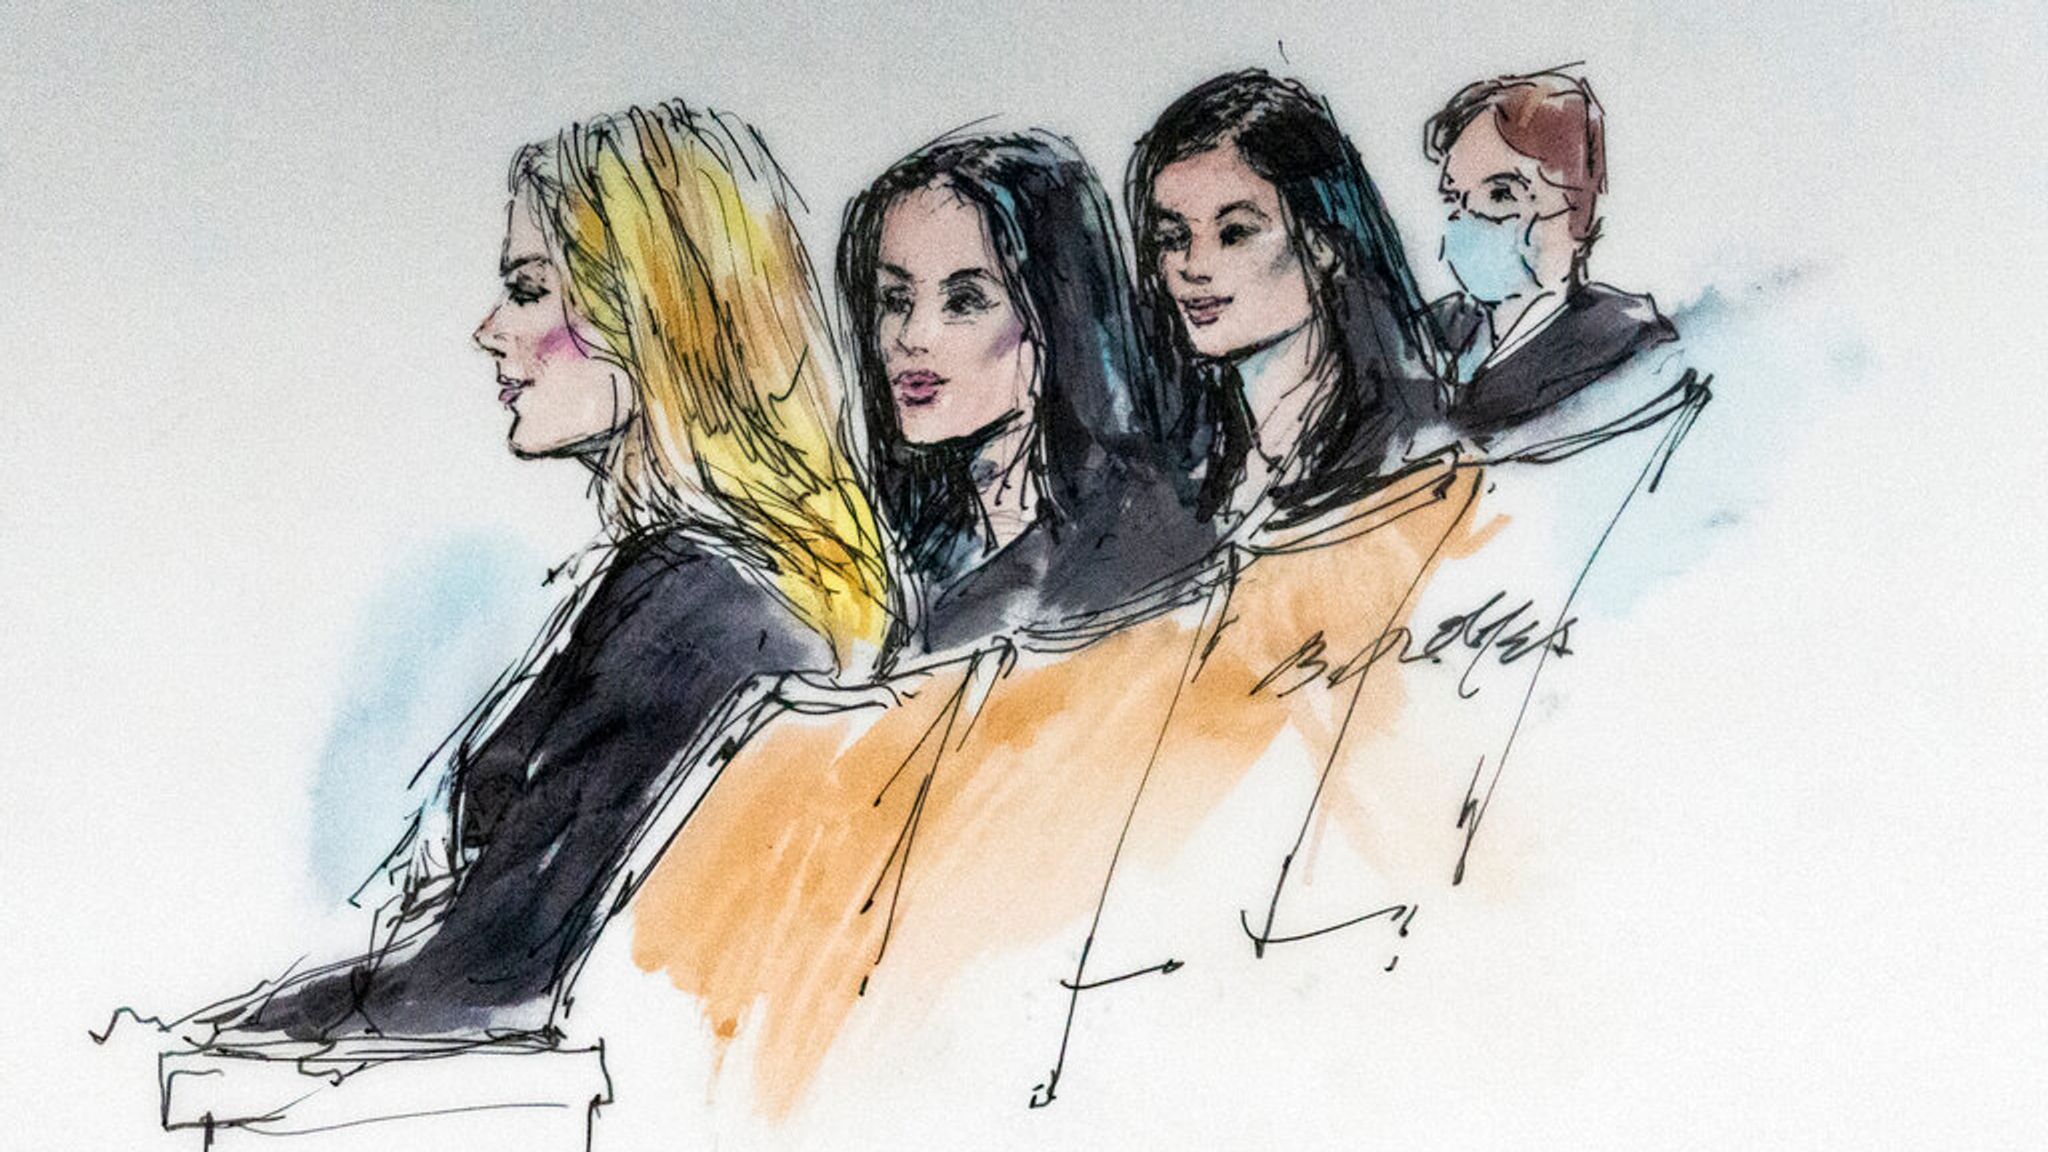 (L-R) Khloe Kardashian, Kim Kardashian, Kylie Jenner, and Kris Jenner are the defendants in the case